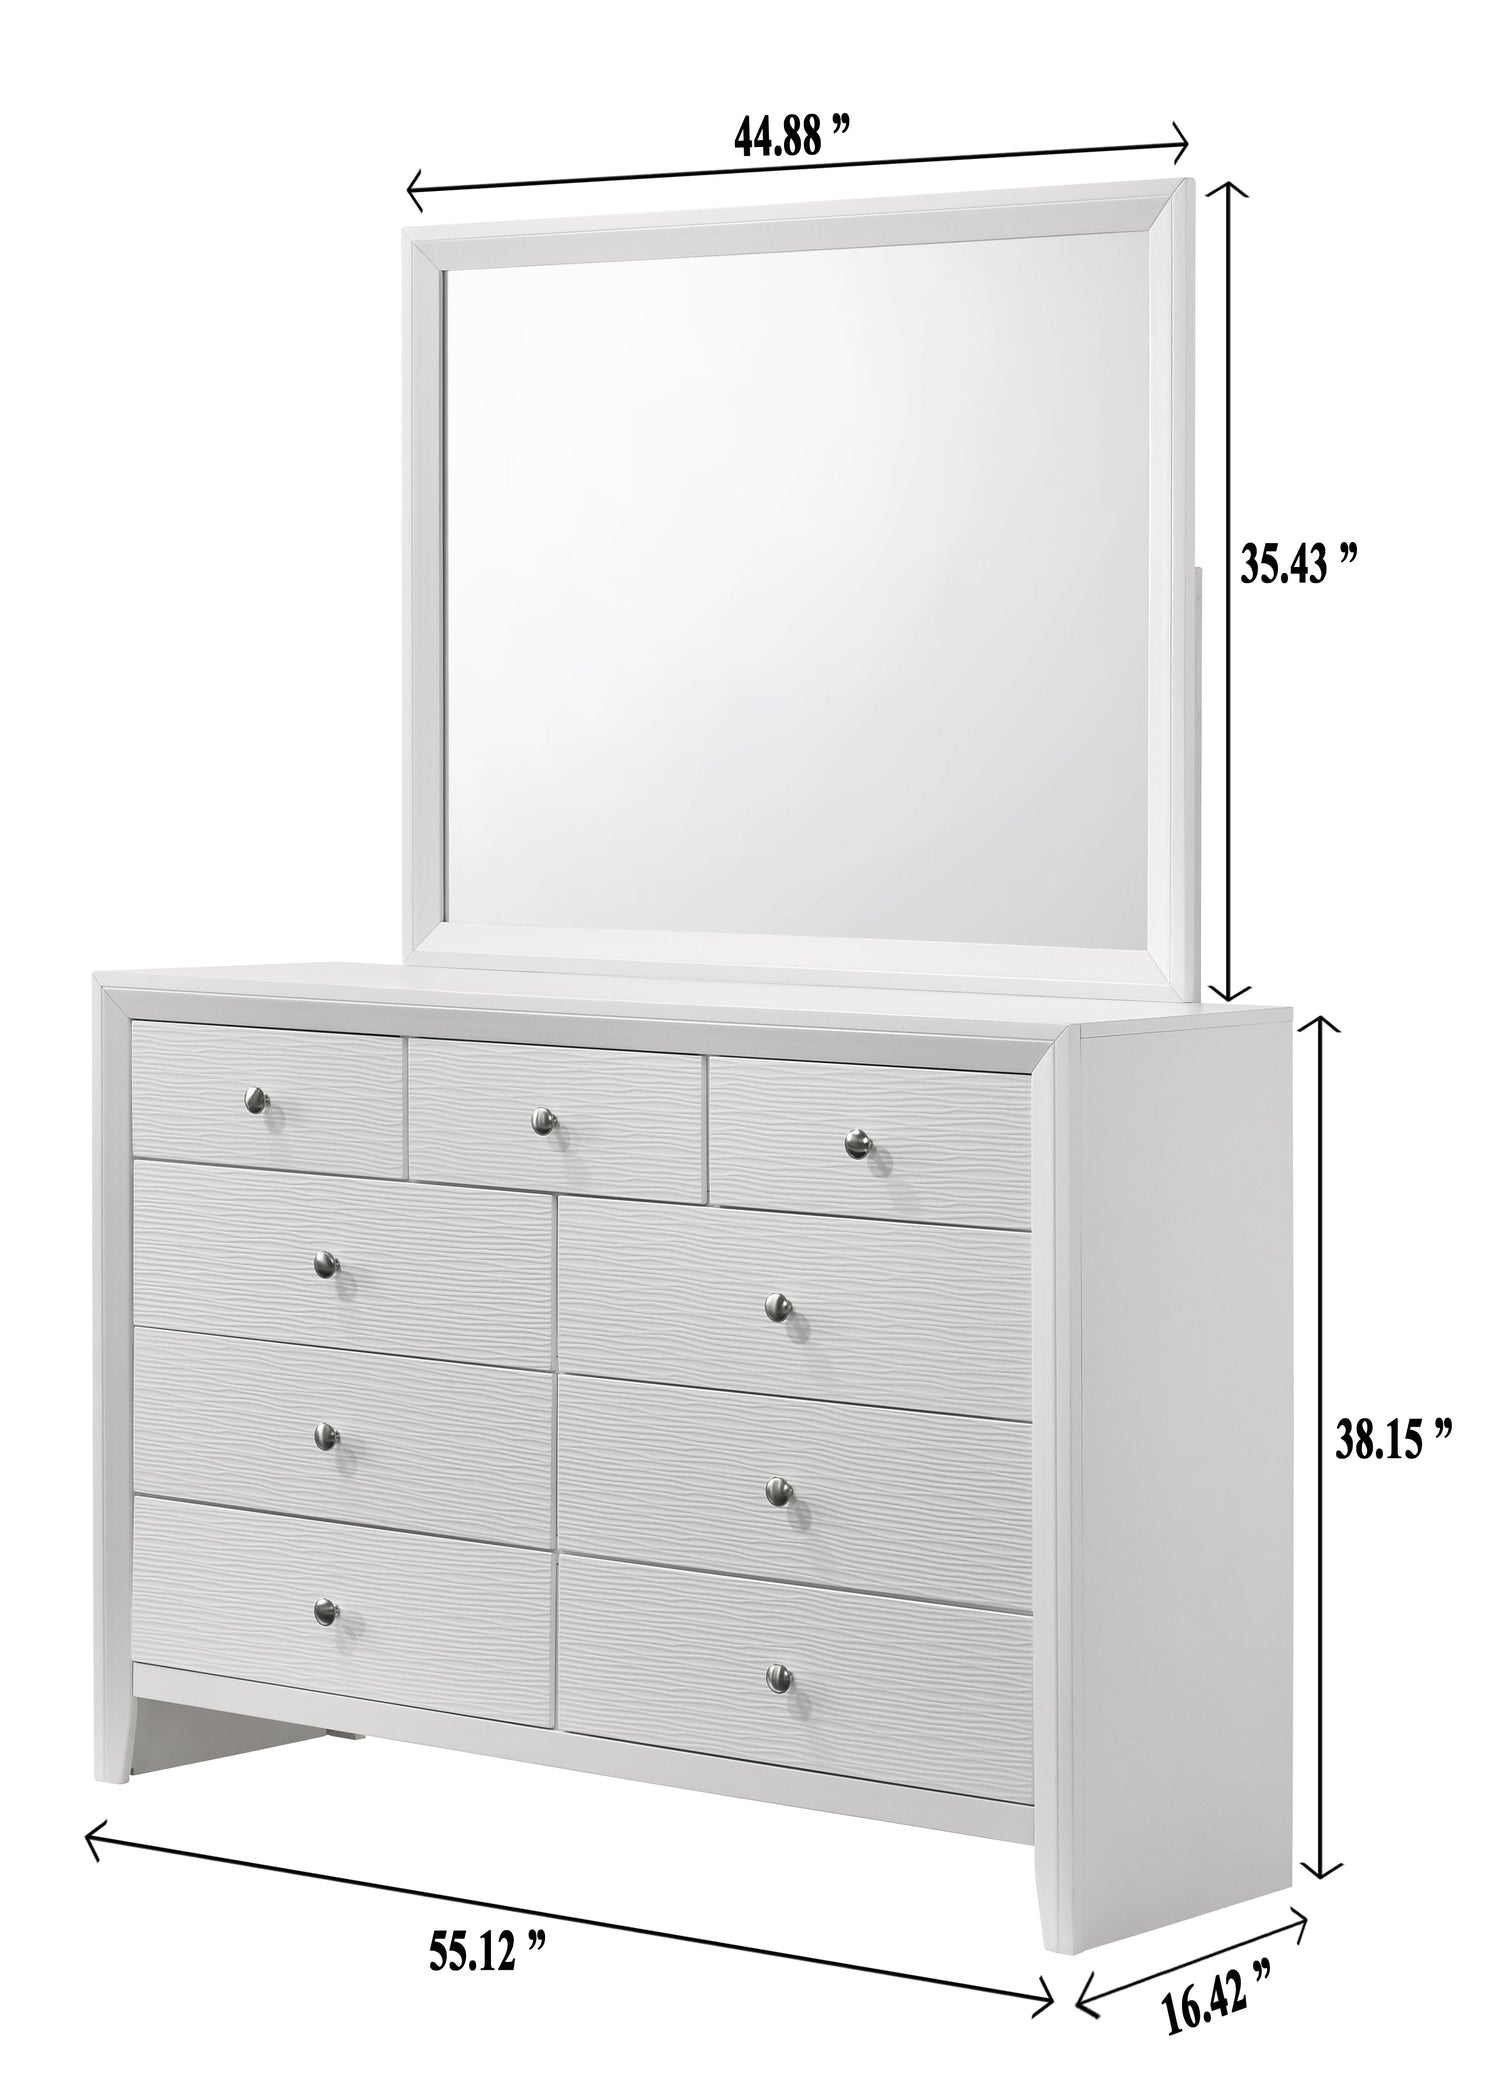 Denker White Panel Youth Bedroom Set - SET | B4712-F-HBFB | B4712-F-RAIL | B4710-2 | B4710-4 - Bien Home Furniture &amp; Electronics